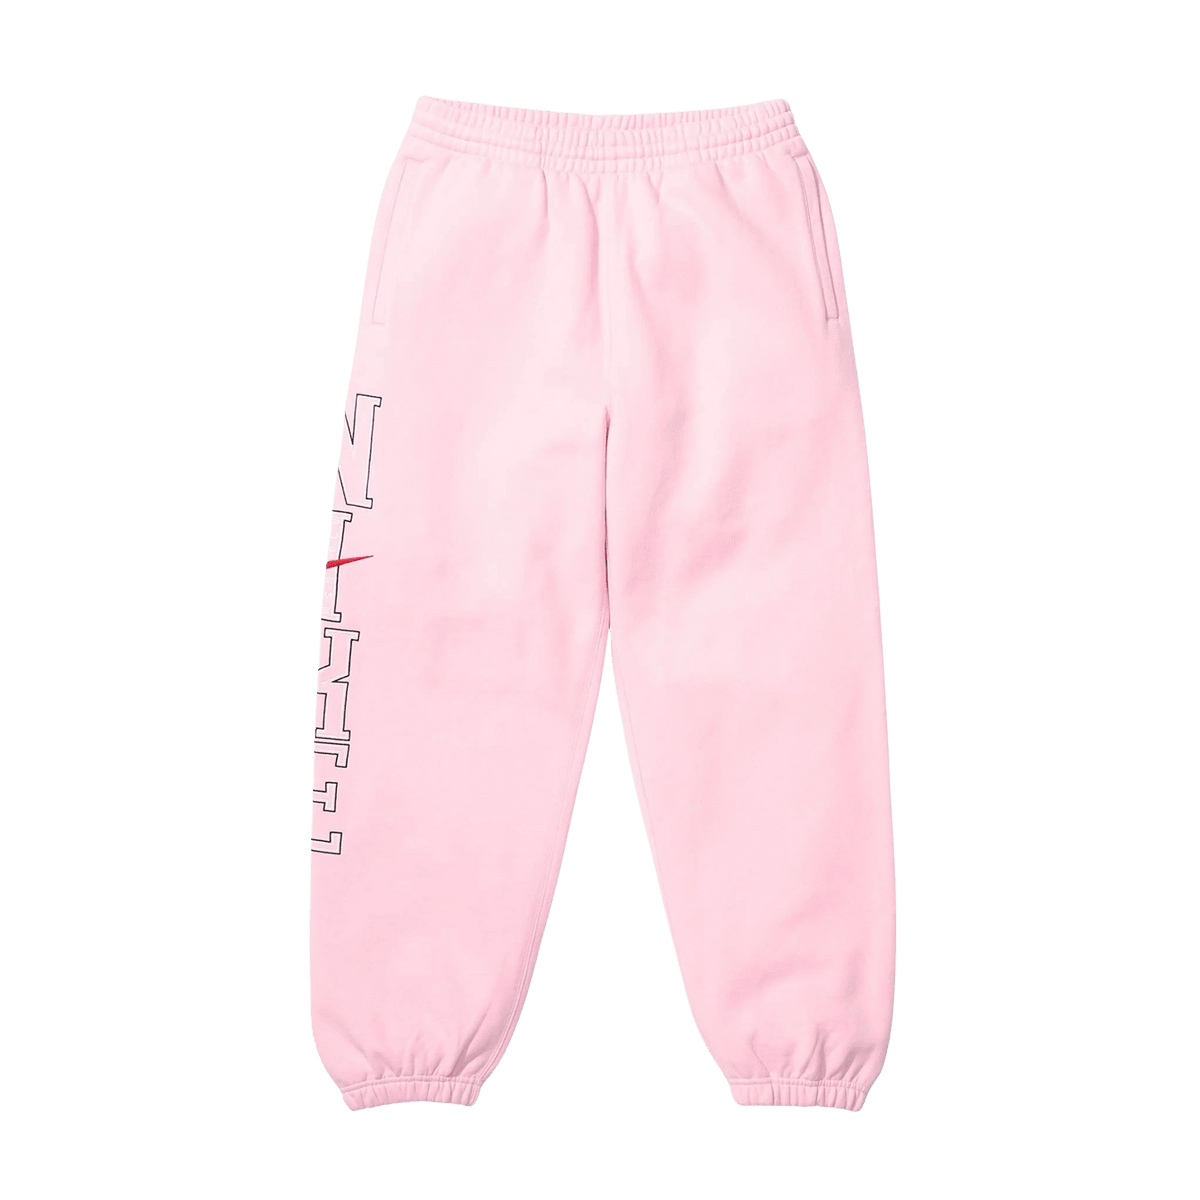 Supreme x Nike Sweatpants 'Pink' - Kick Game